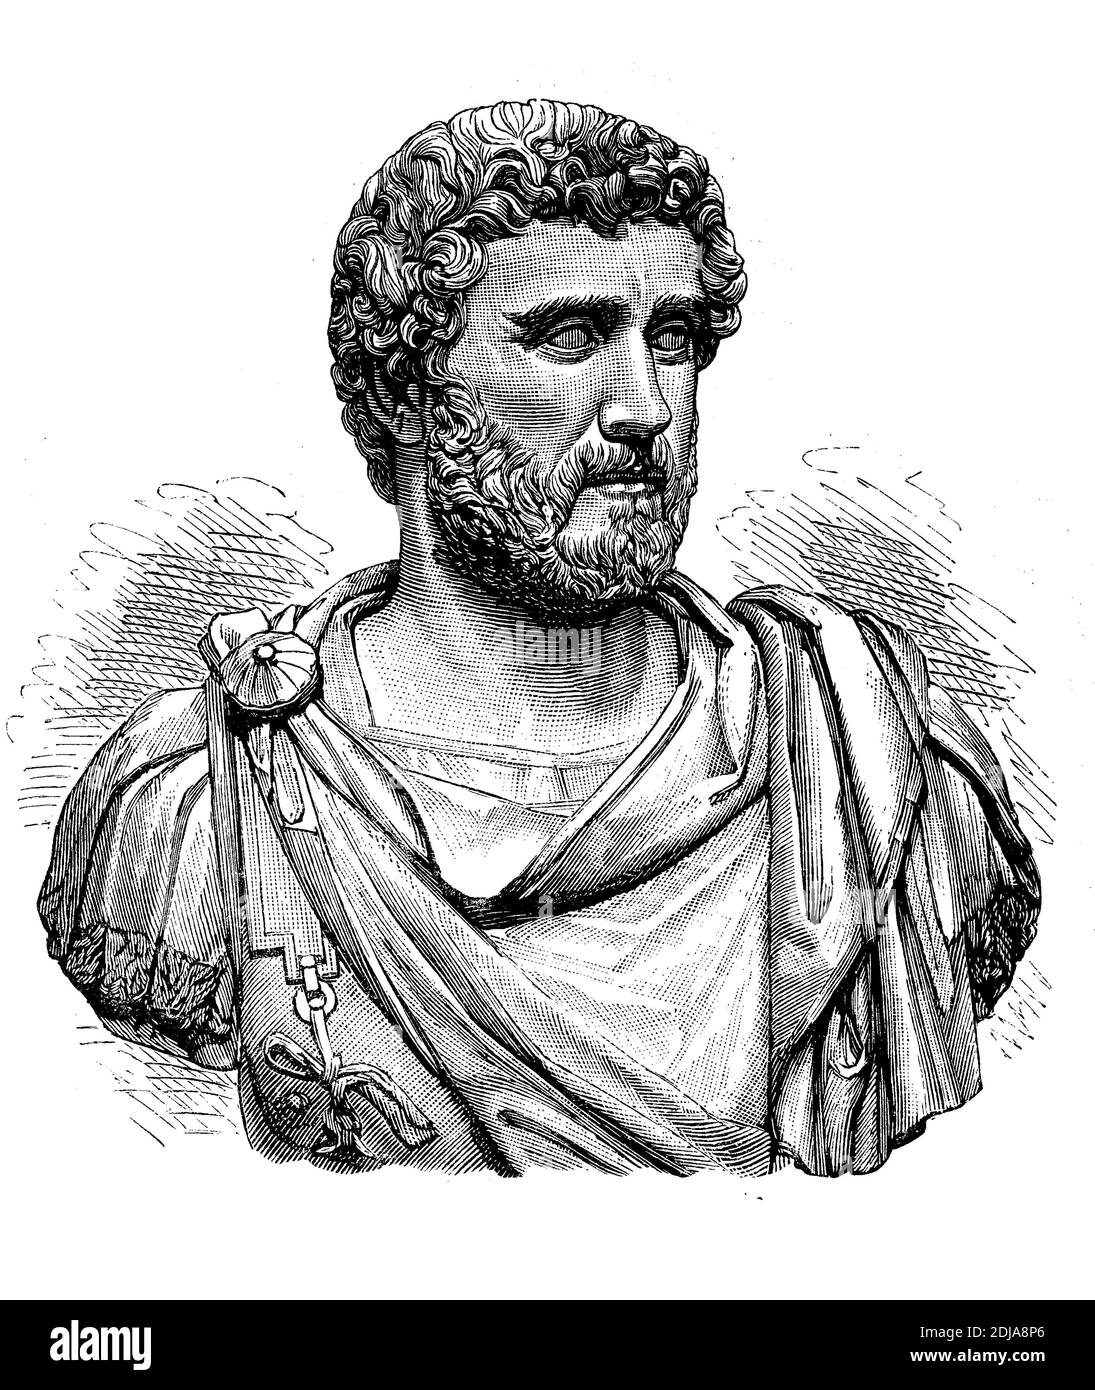 Le meditazioni di Marco Aurelio Antonino : Marco Aurelio, imperatore di  Roma, 121-180 Foto stock - Alamy